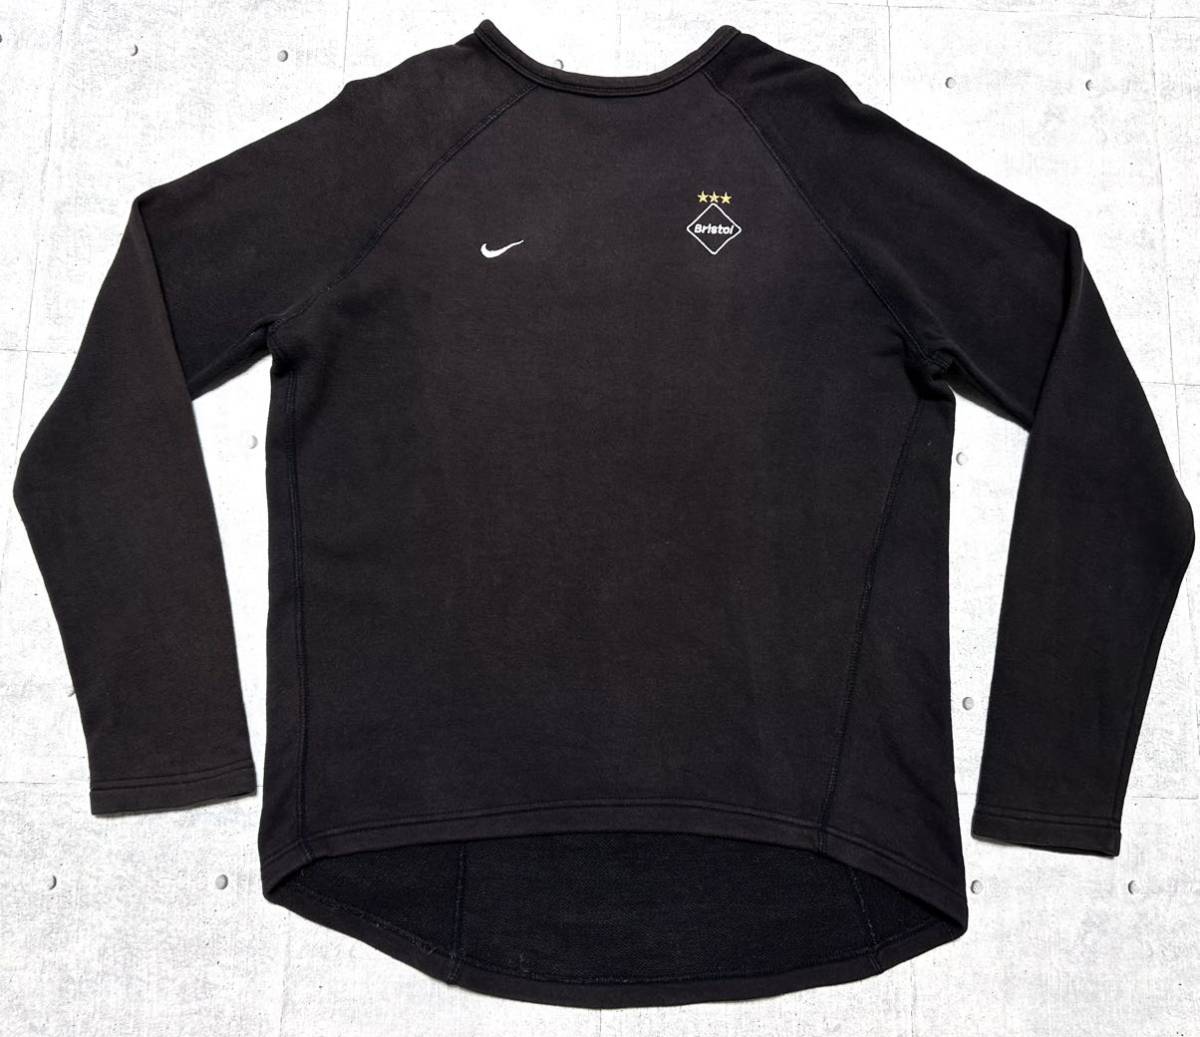 efsi- Real Bliss toru Nike sof тренировочный футболка la gran рукав F.C.Real Bristol тонкий NIKE SOPH шар 7918